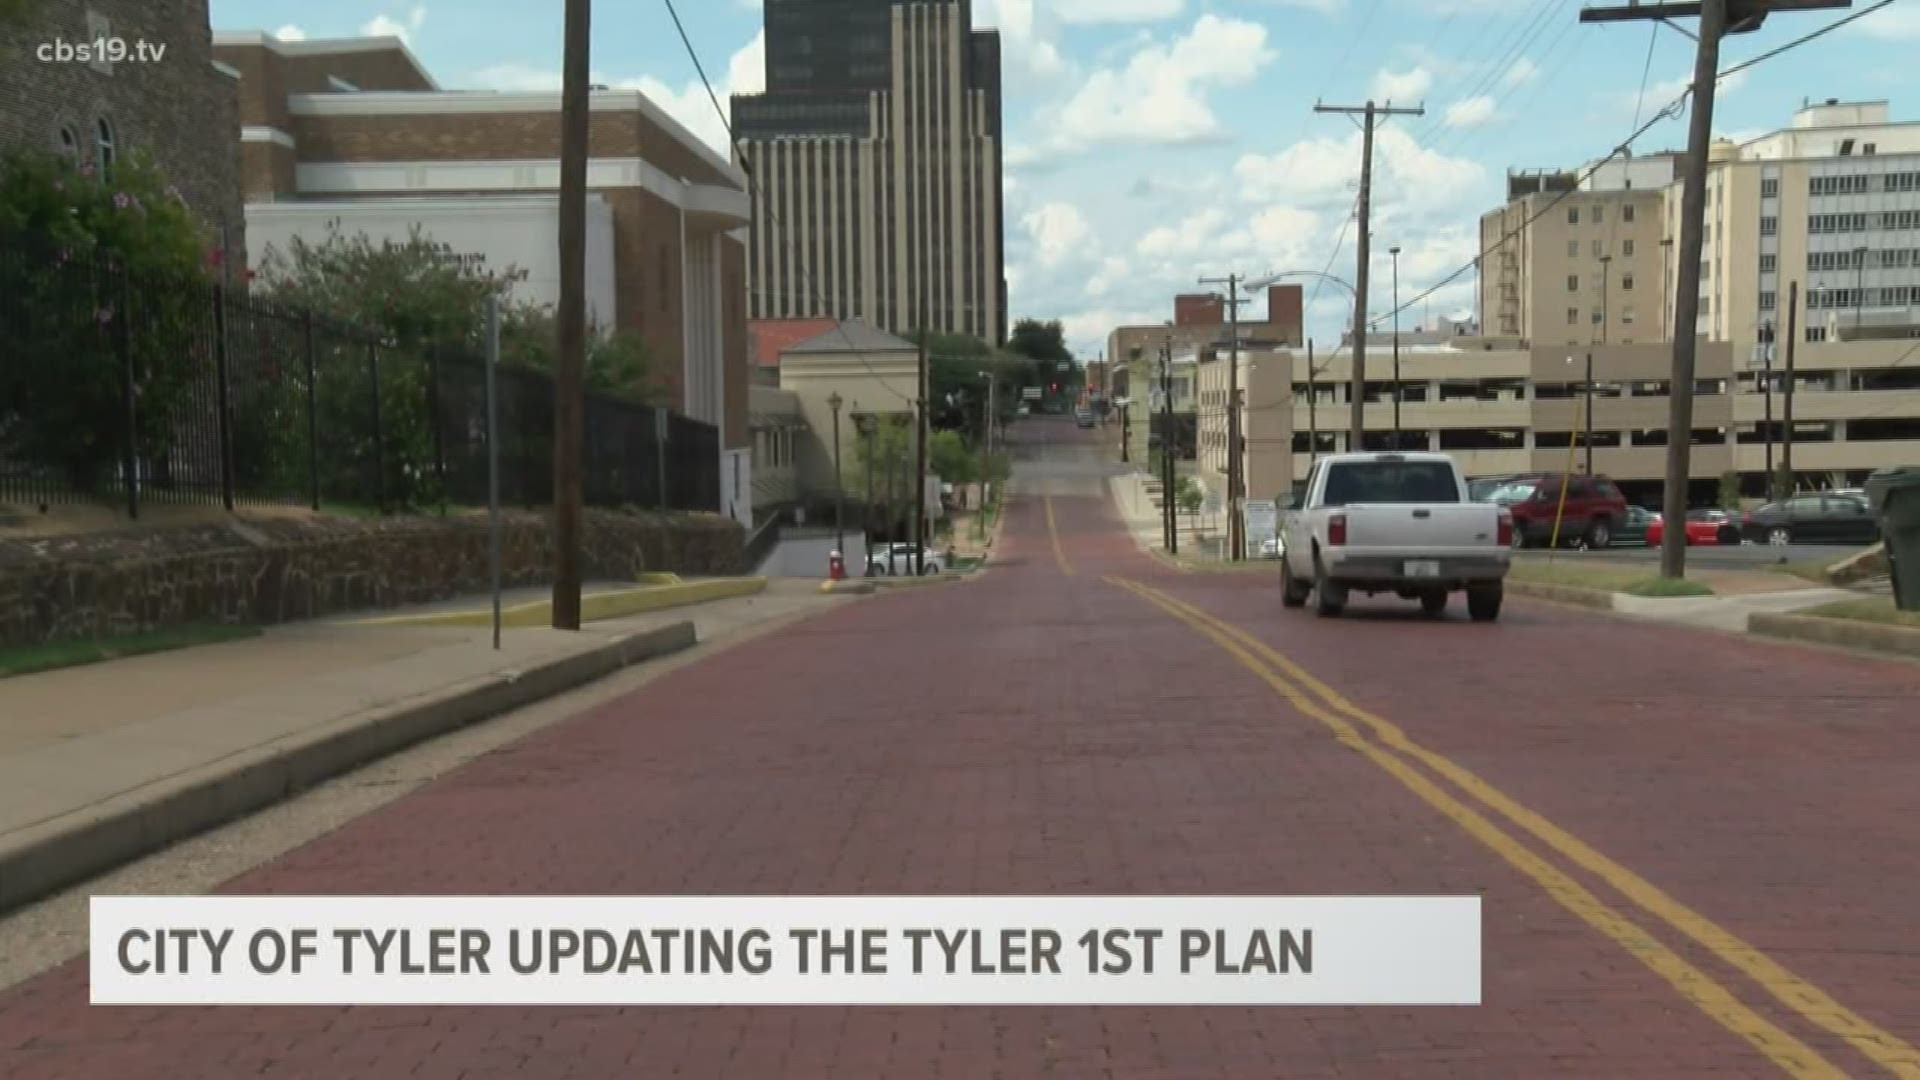 The Tyler City Council heard a progress report on the Tyler 1st Comprehensive Plan's update.